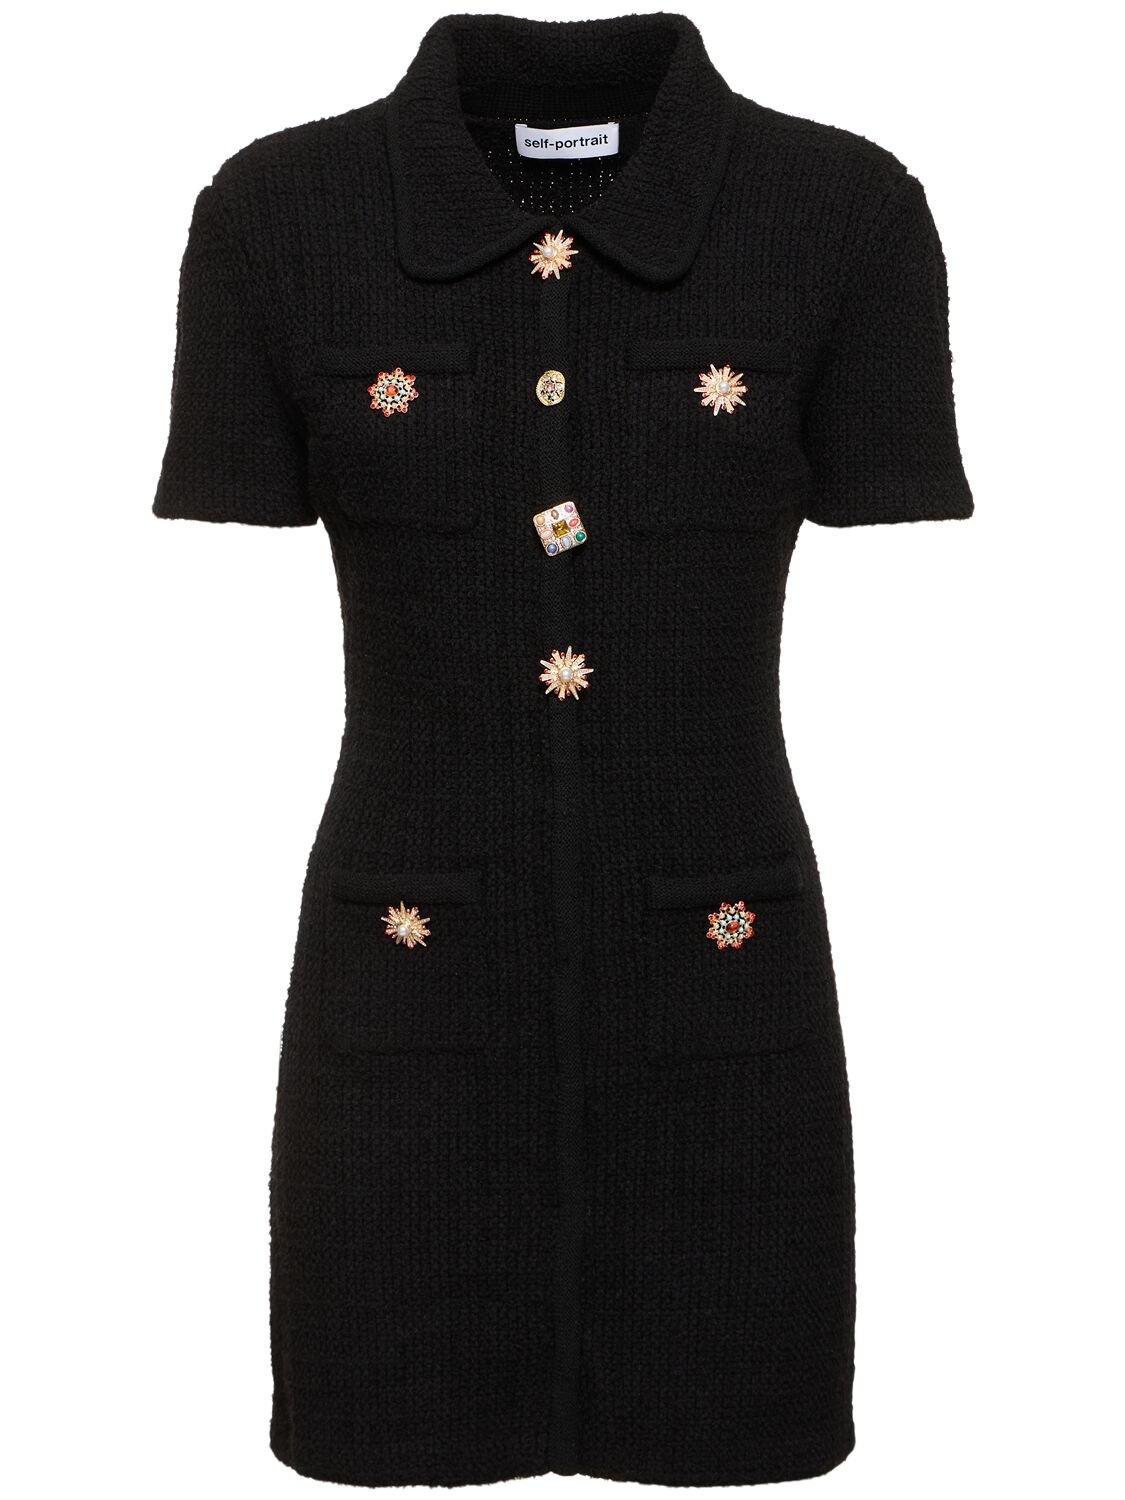 Self-portrait Embellished Knit Button Down Mini Dress In Black